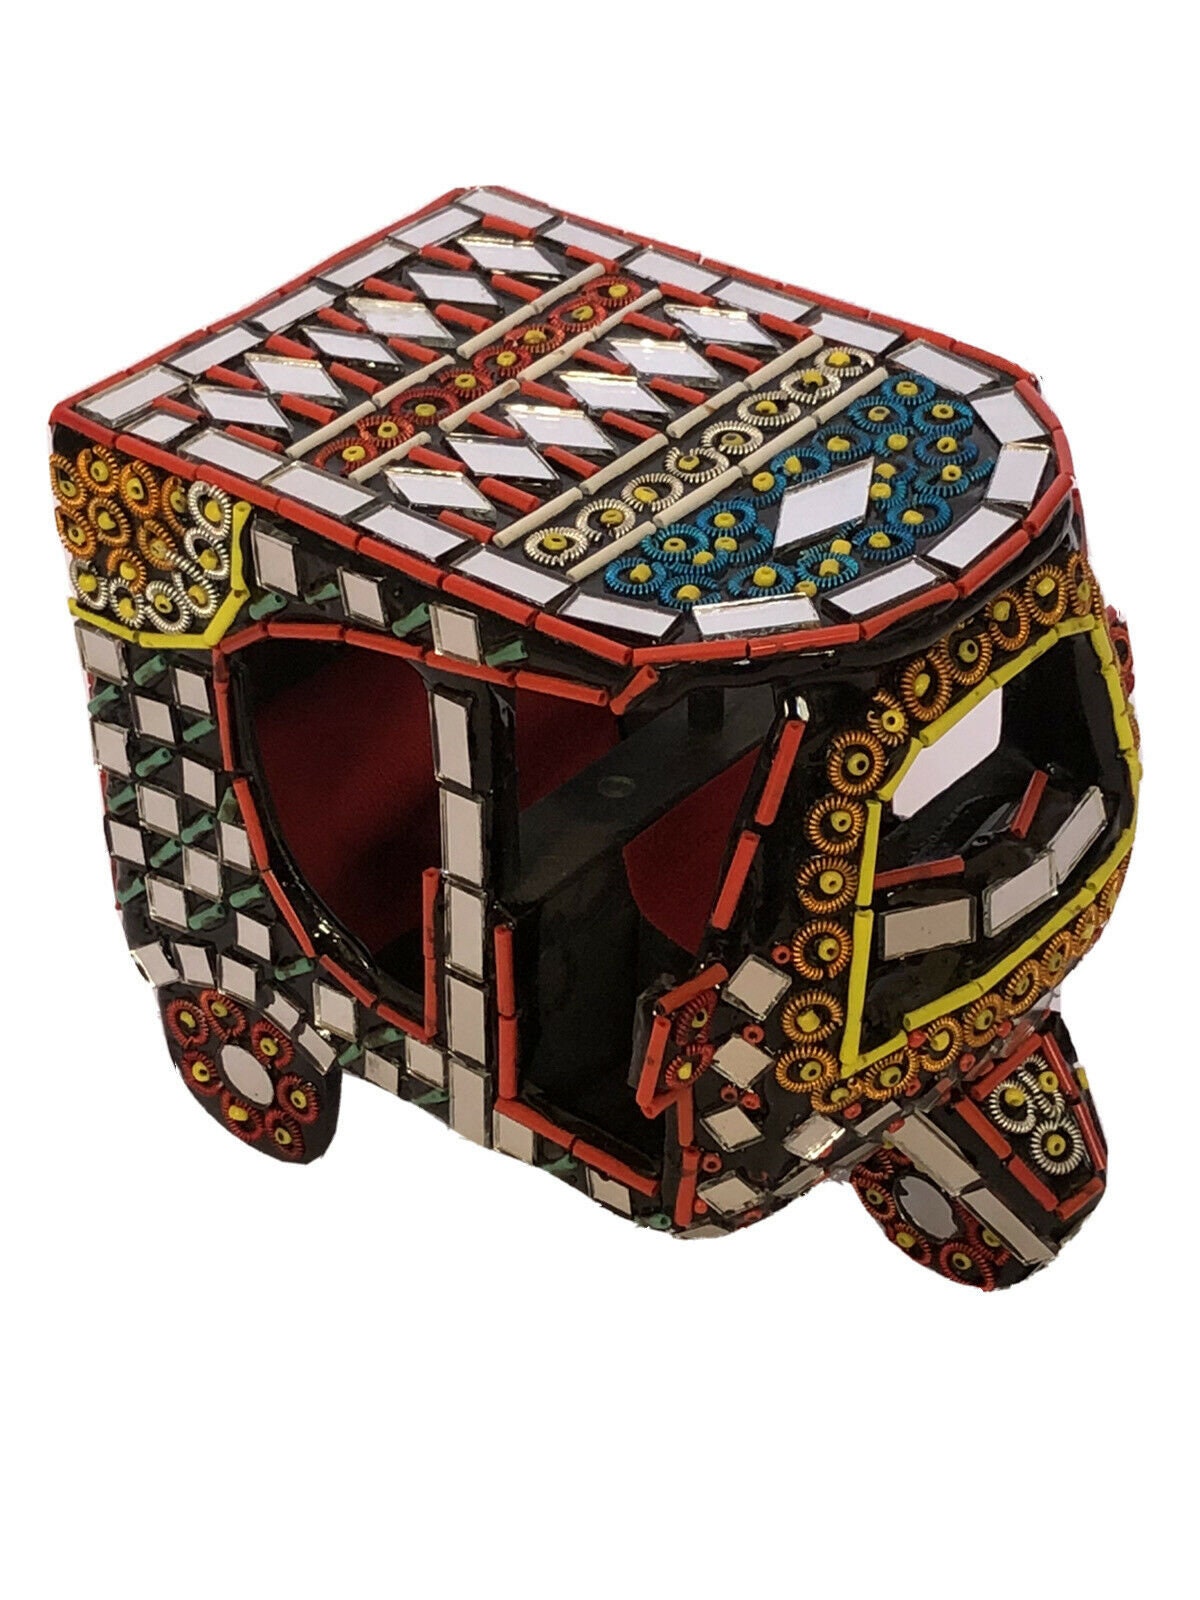 Hand Painted Truck Art Suitcase – Urban Truck Art